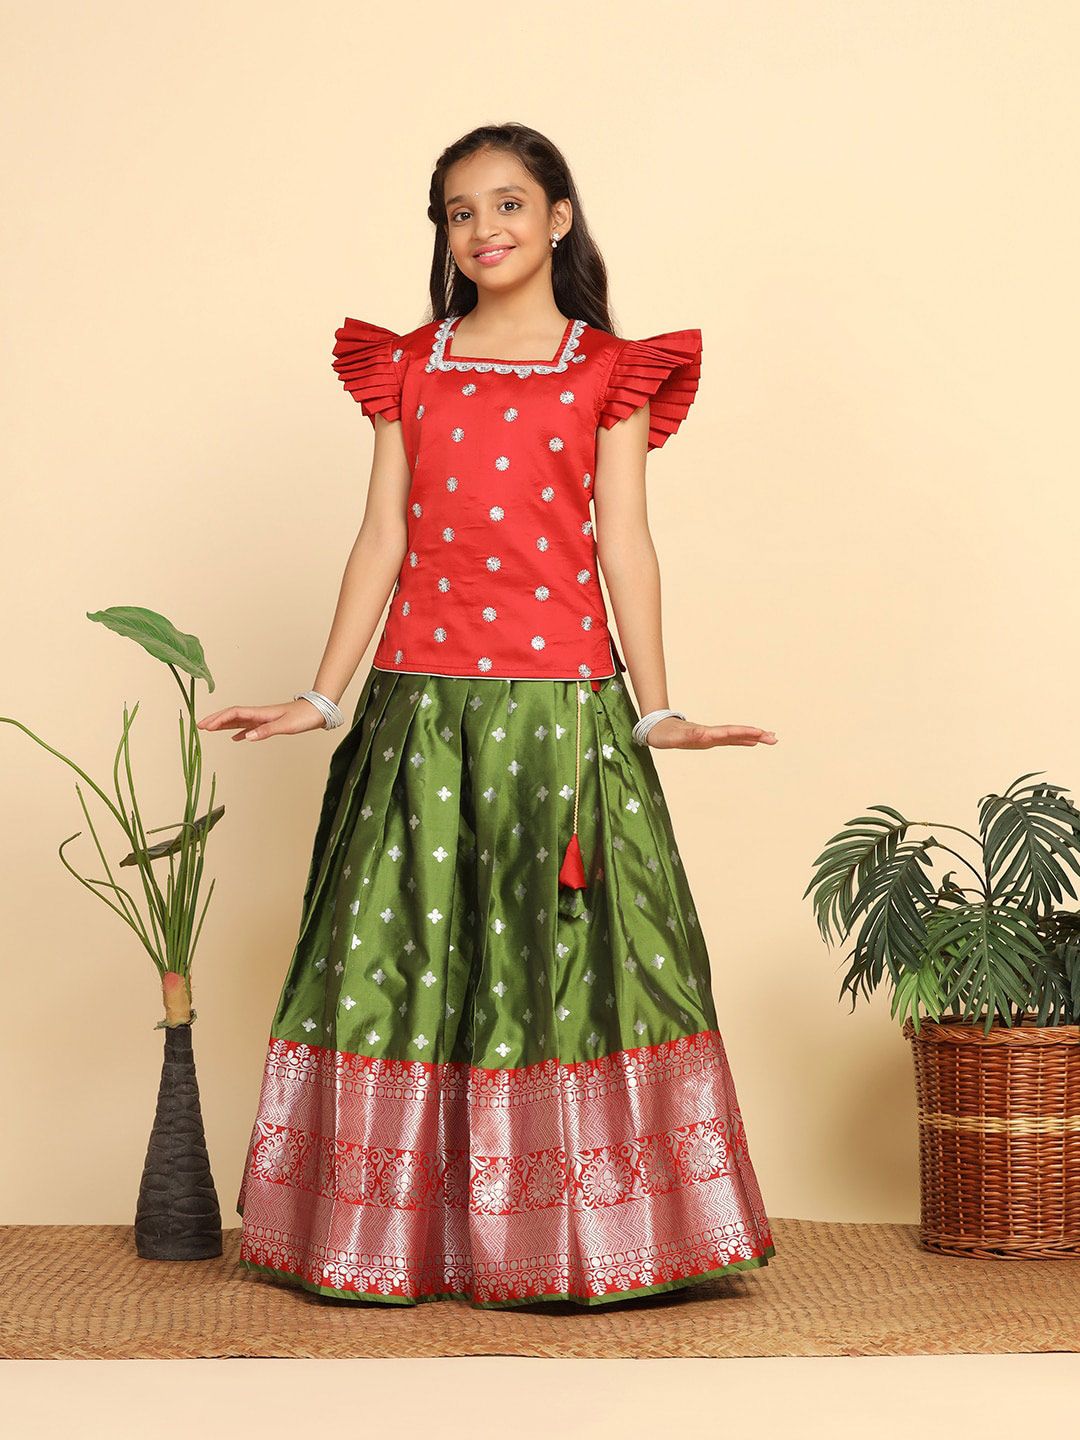 FASHION DREAM Girls Embroidered Ready to Wear Lehenga Choli Price in India